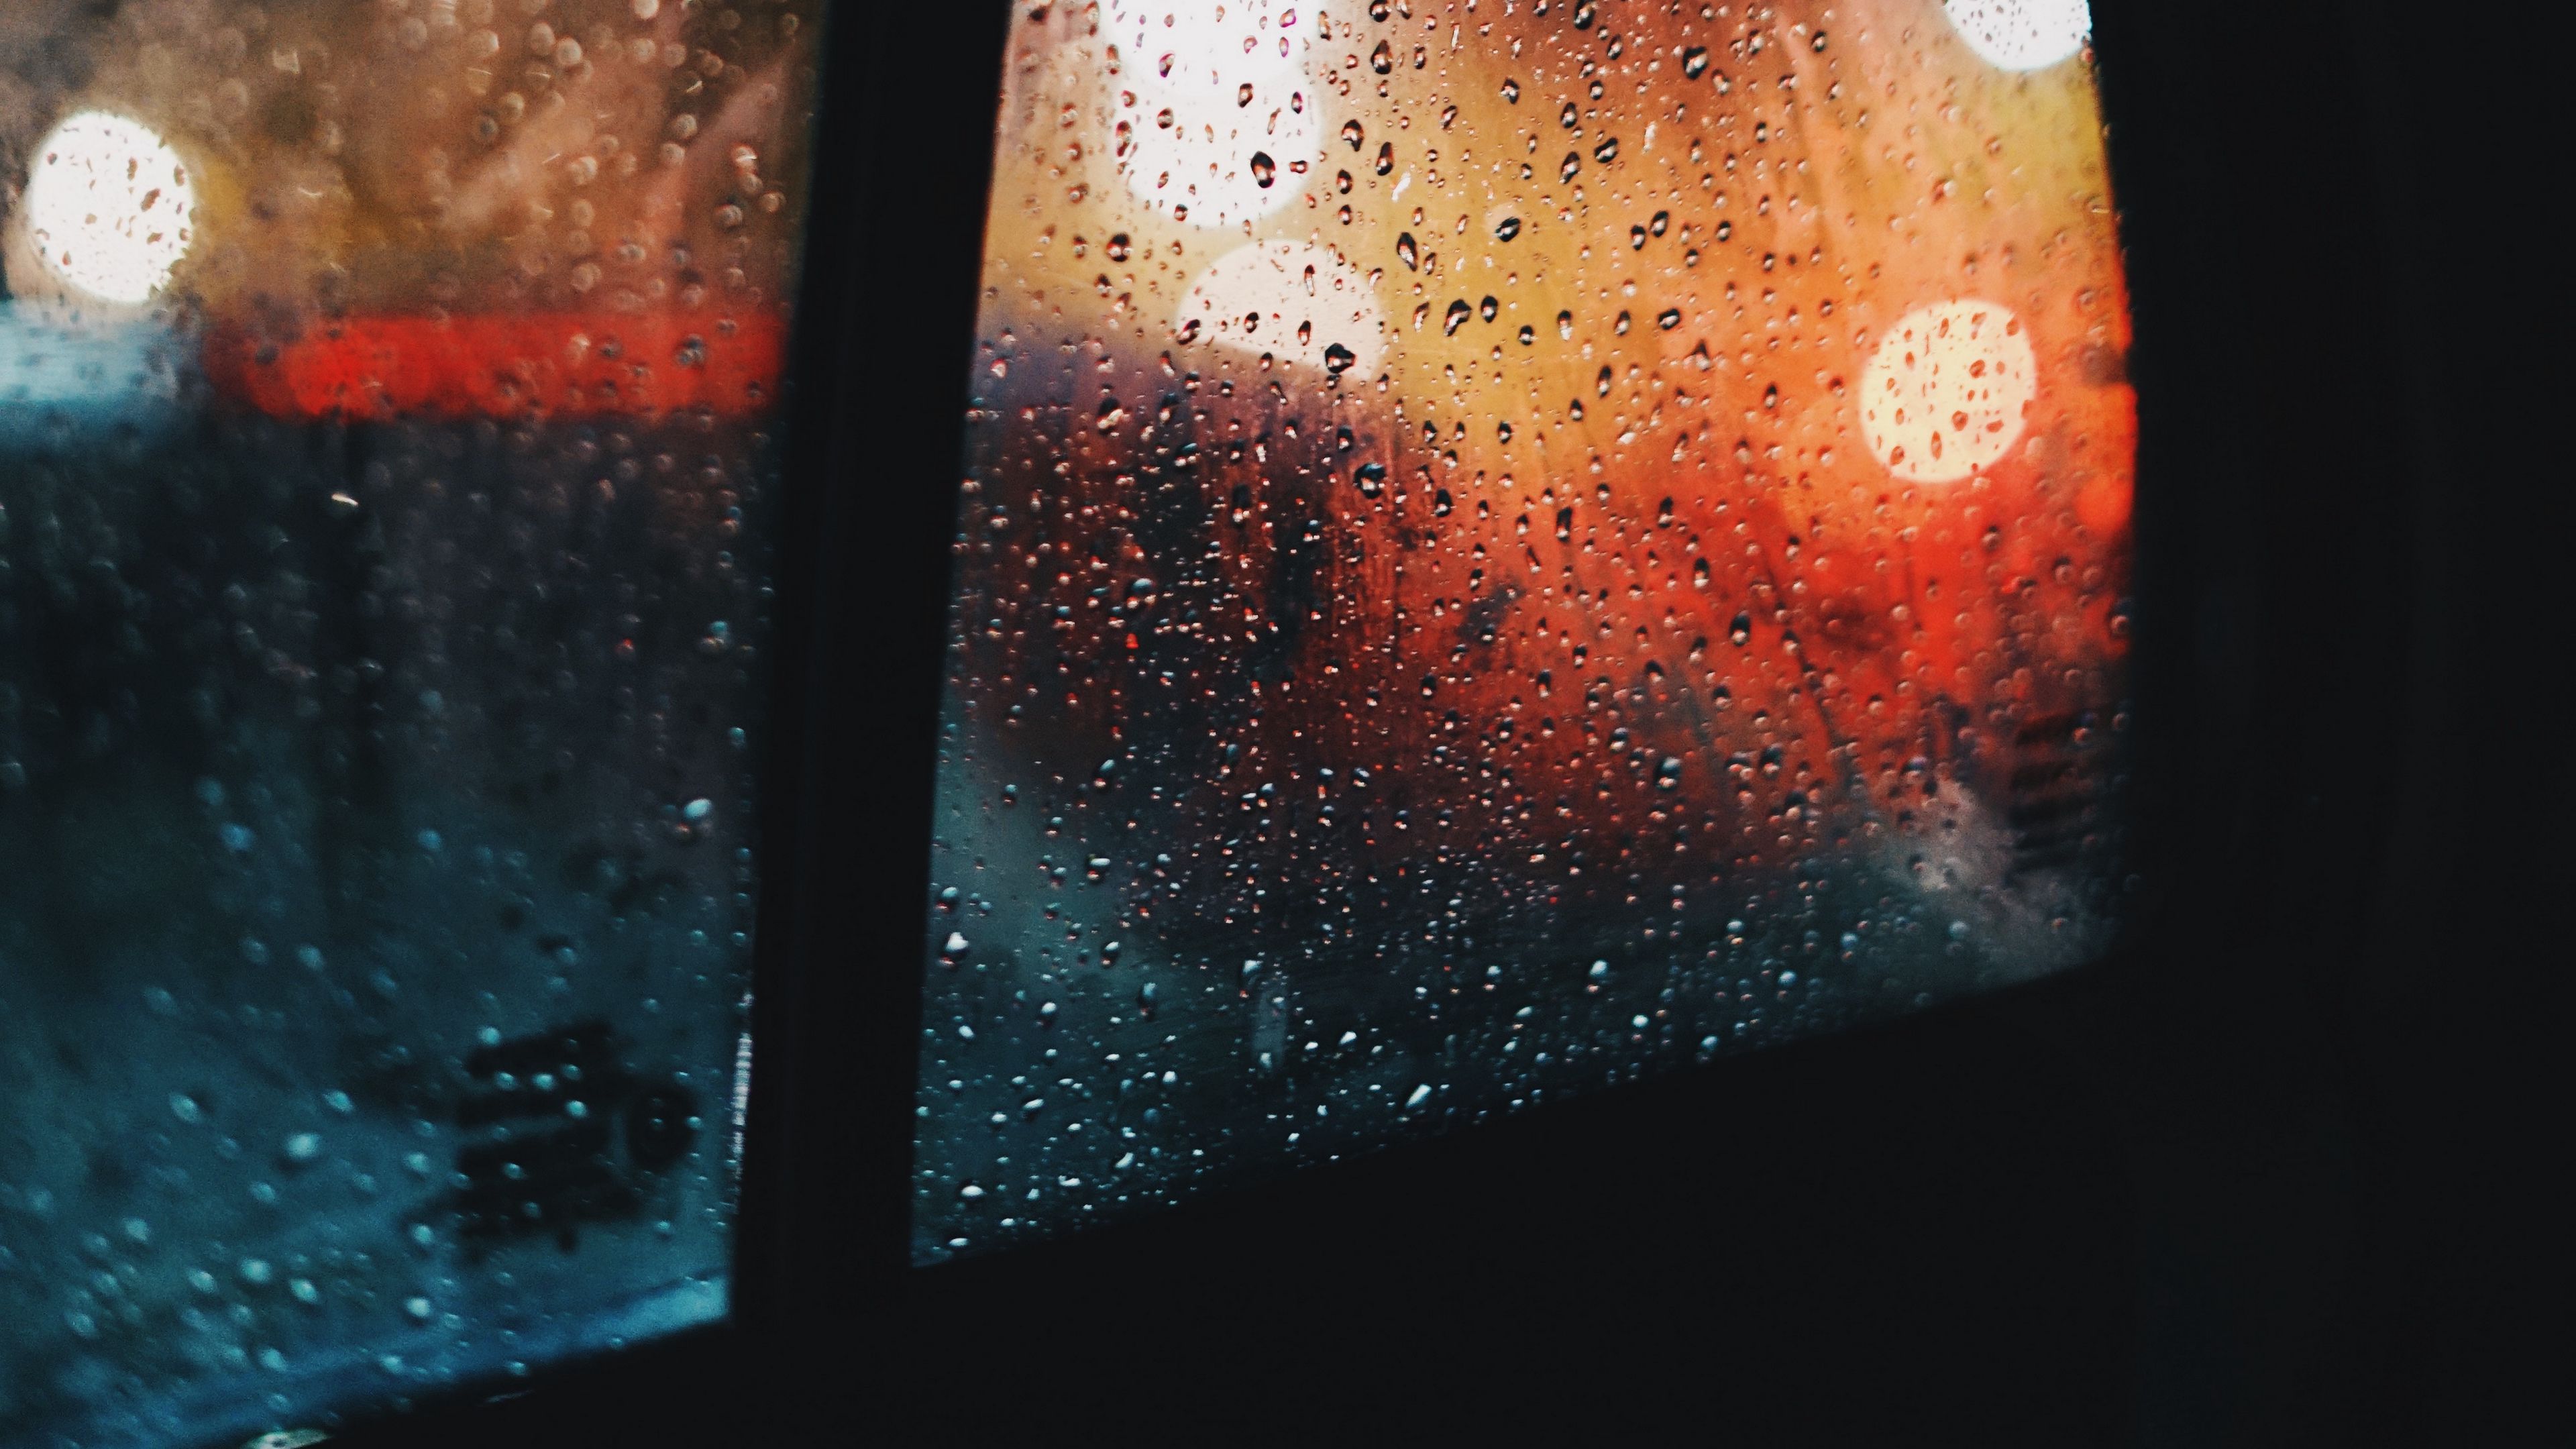 Download wallpaper 3840x2160 window, rain, drops, car, glass, glare 4k uhd  16:9 hd background